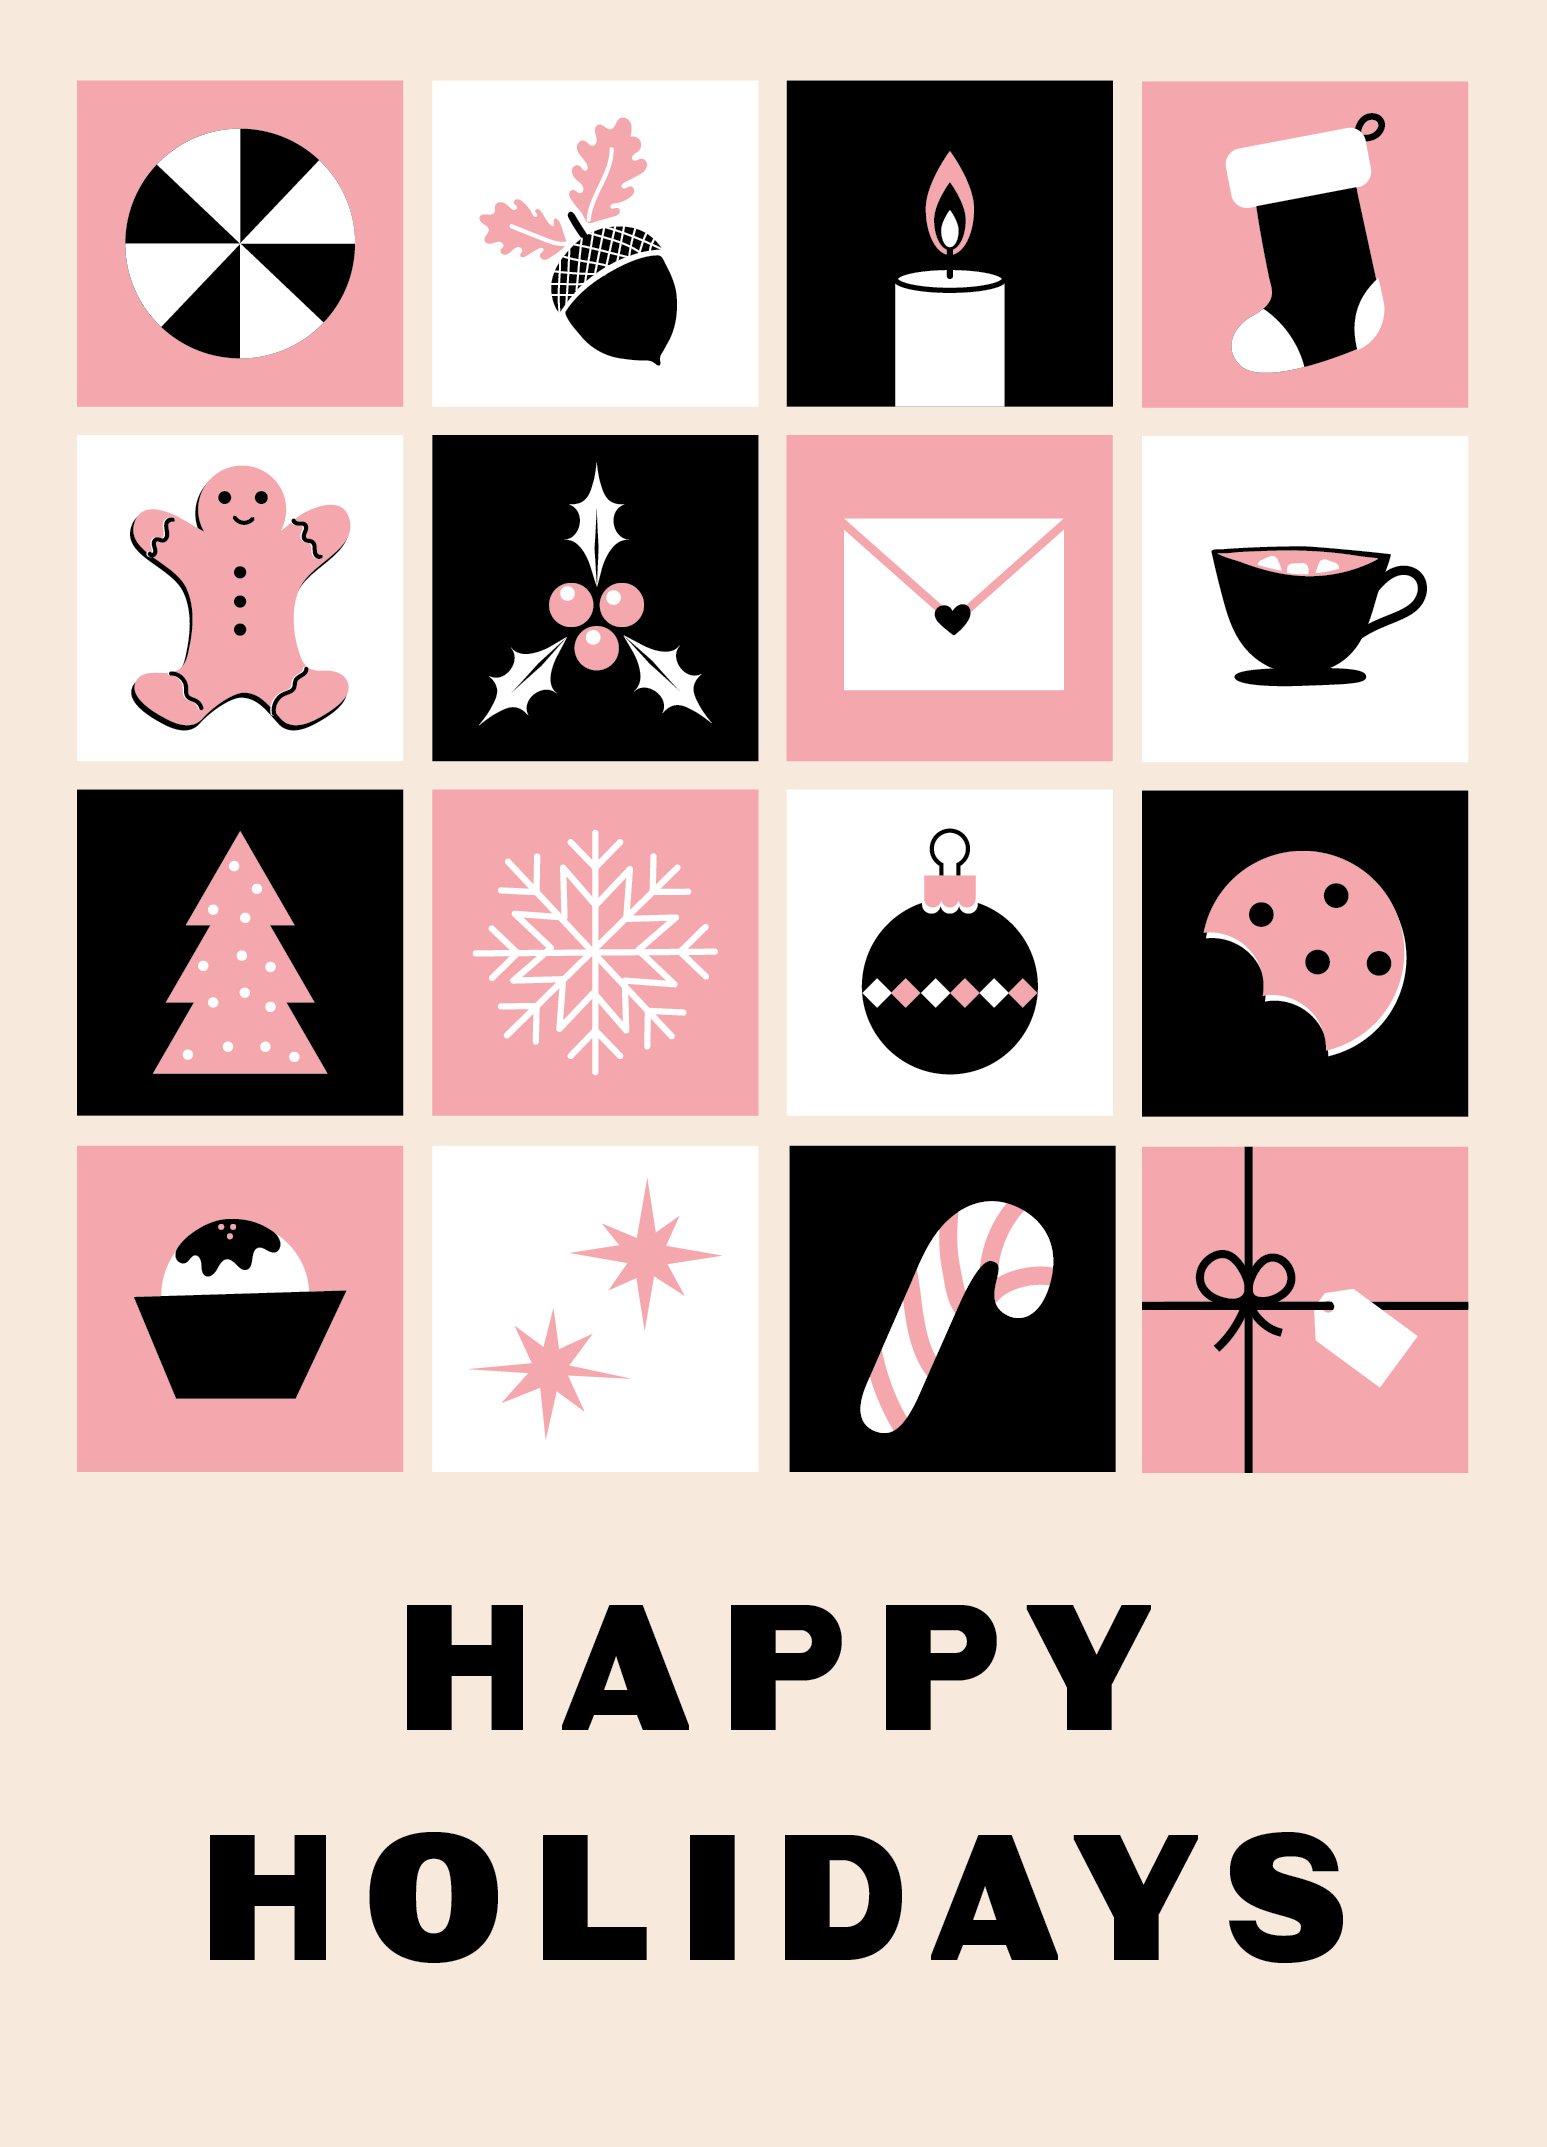 Custom Illustration for Annual Holiday Card 